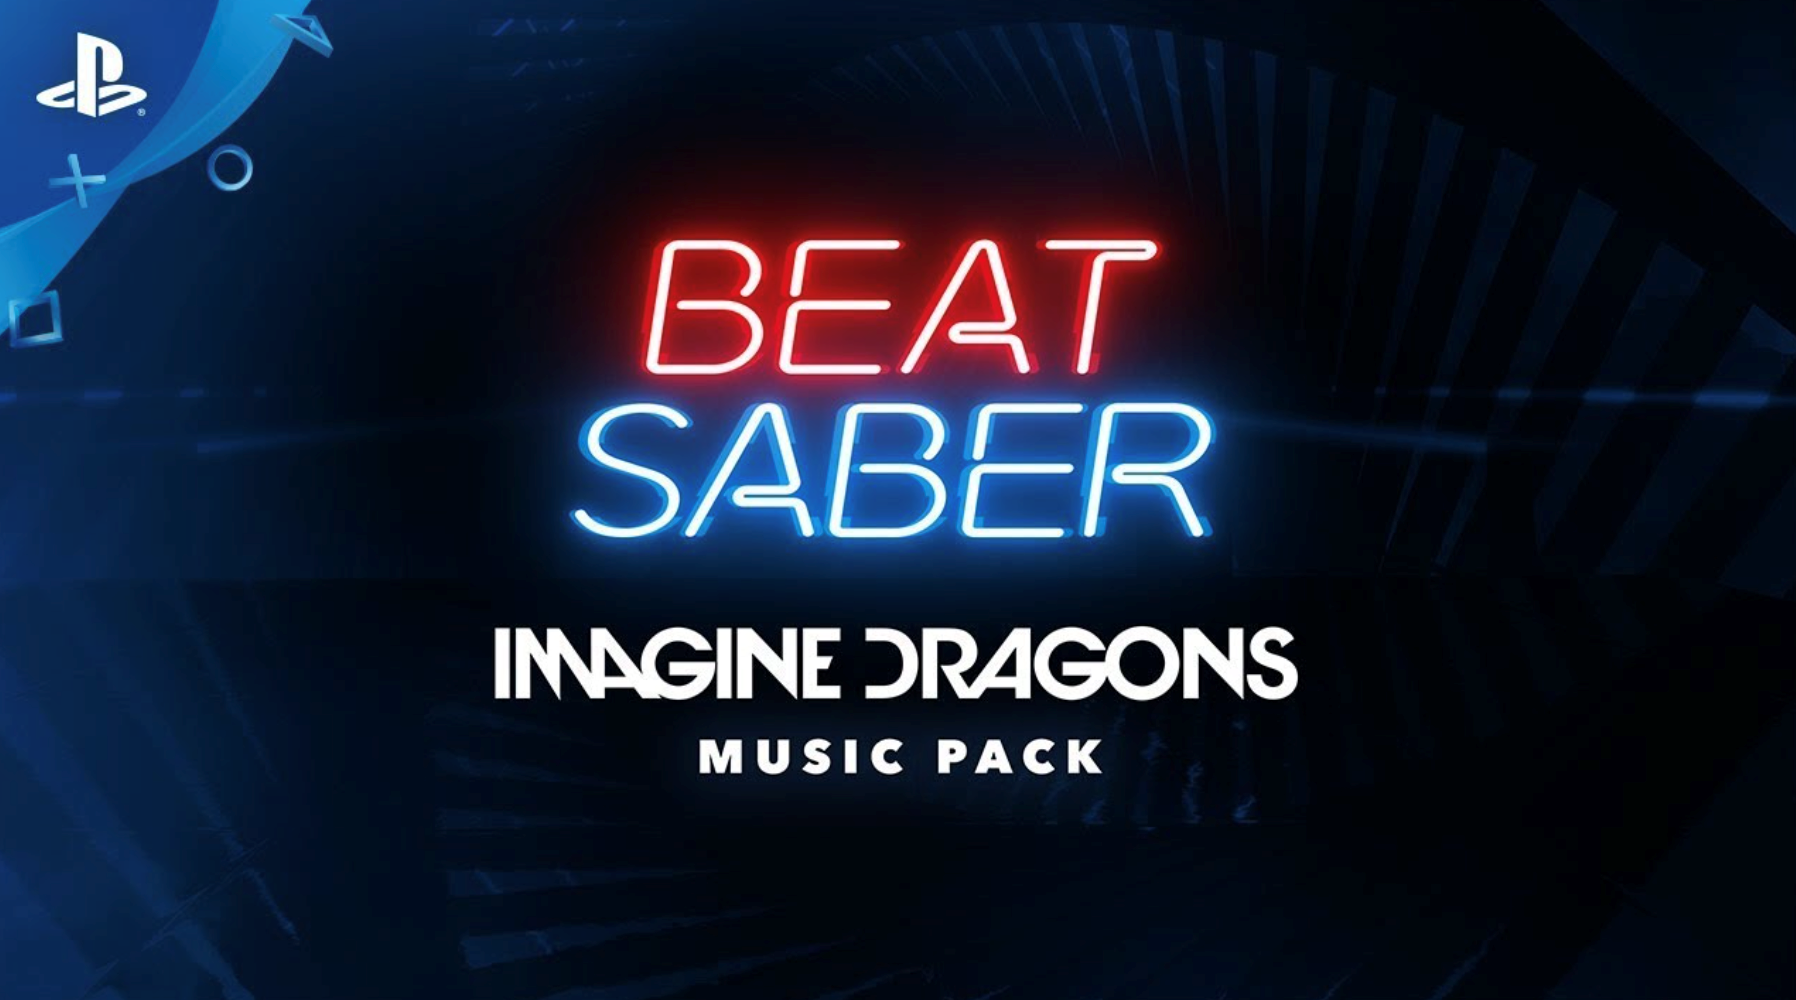 Beat saber ps4. Beat saber + imagine Dragons Music Pack ps4. Beat the Dragon. Beat saber imagine Dragons Expert Plus.